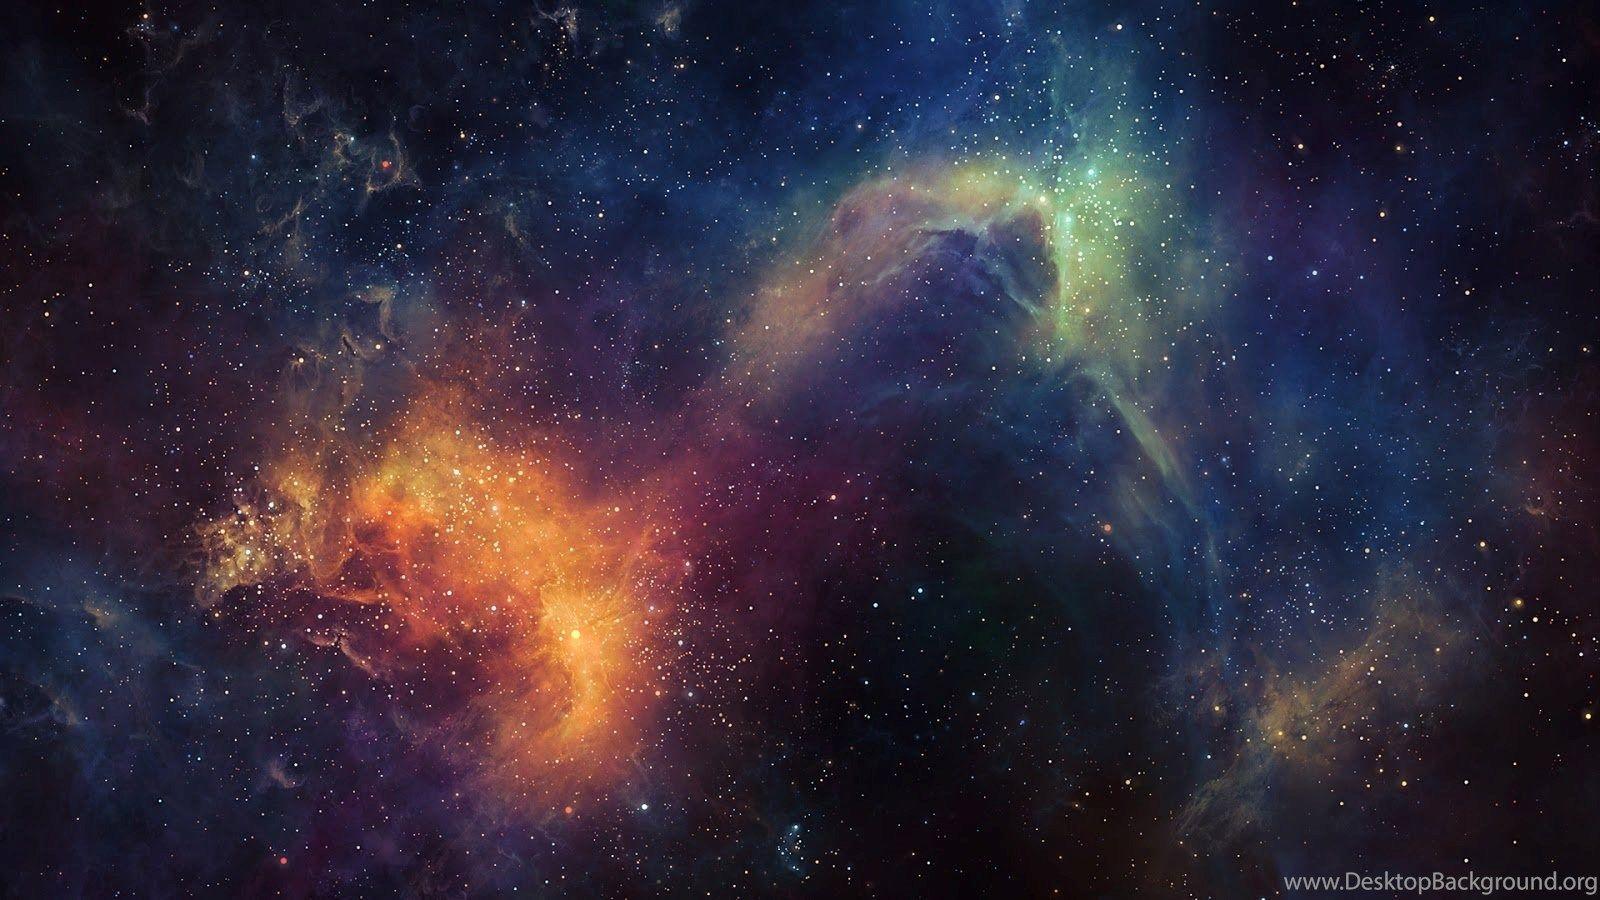 Hubble Deep Zoom Into The Carina Nebula - YouTube